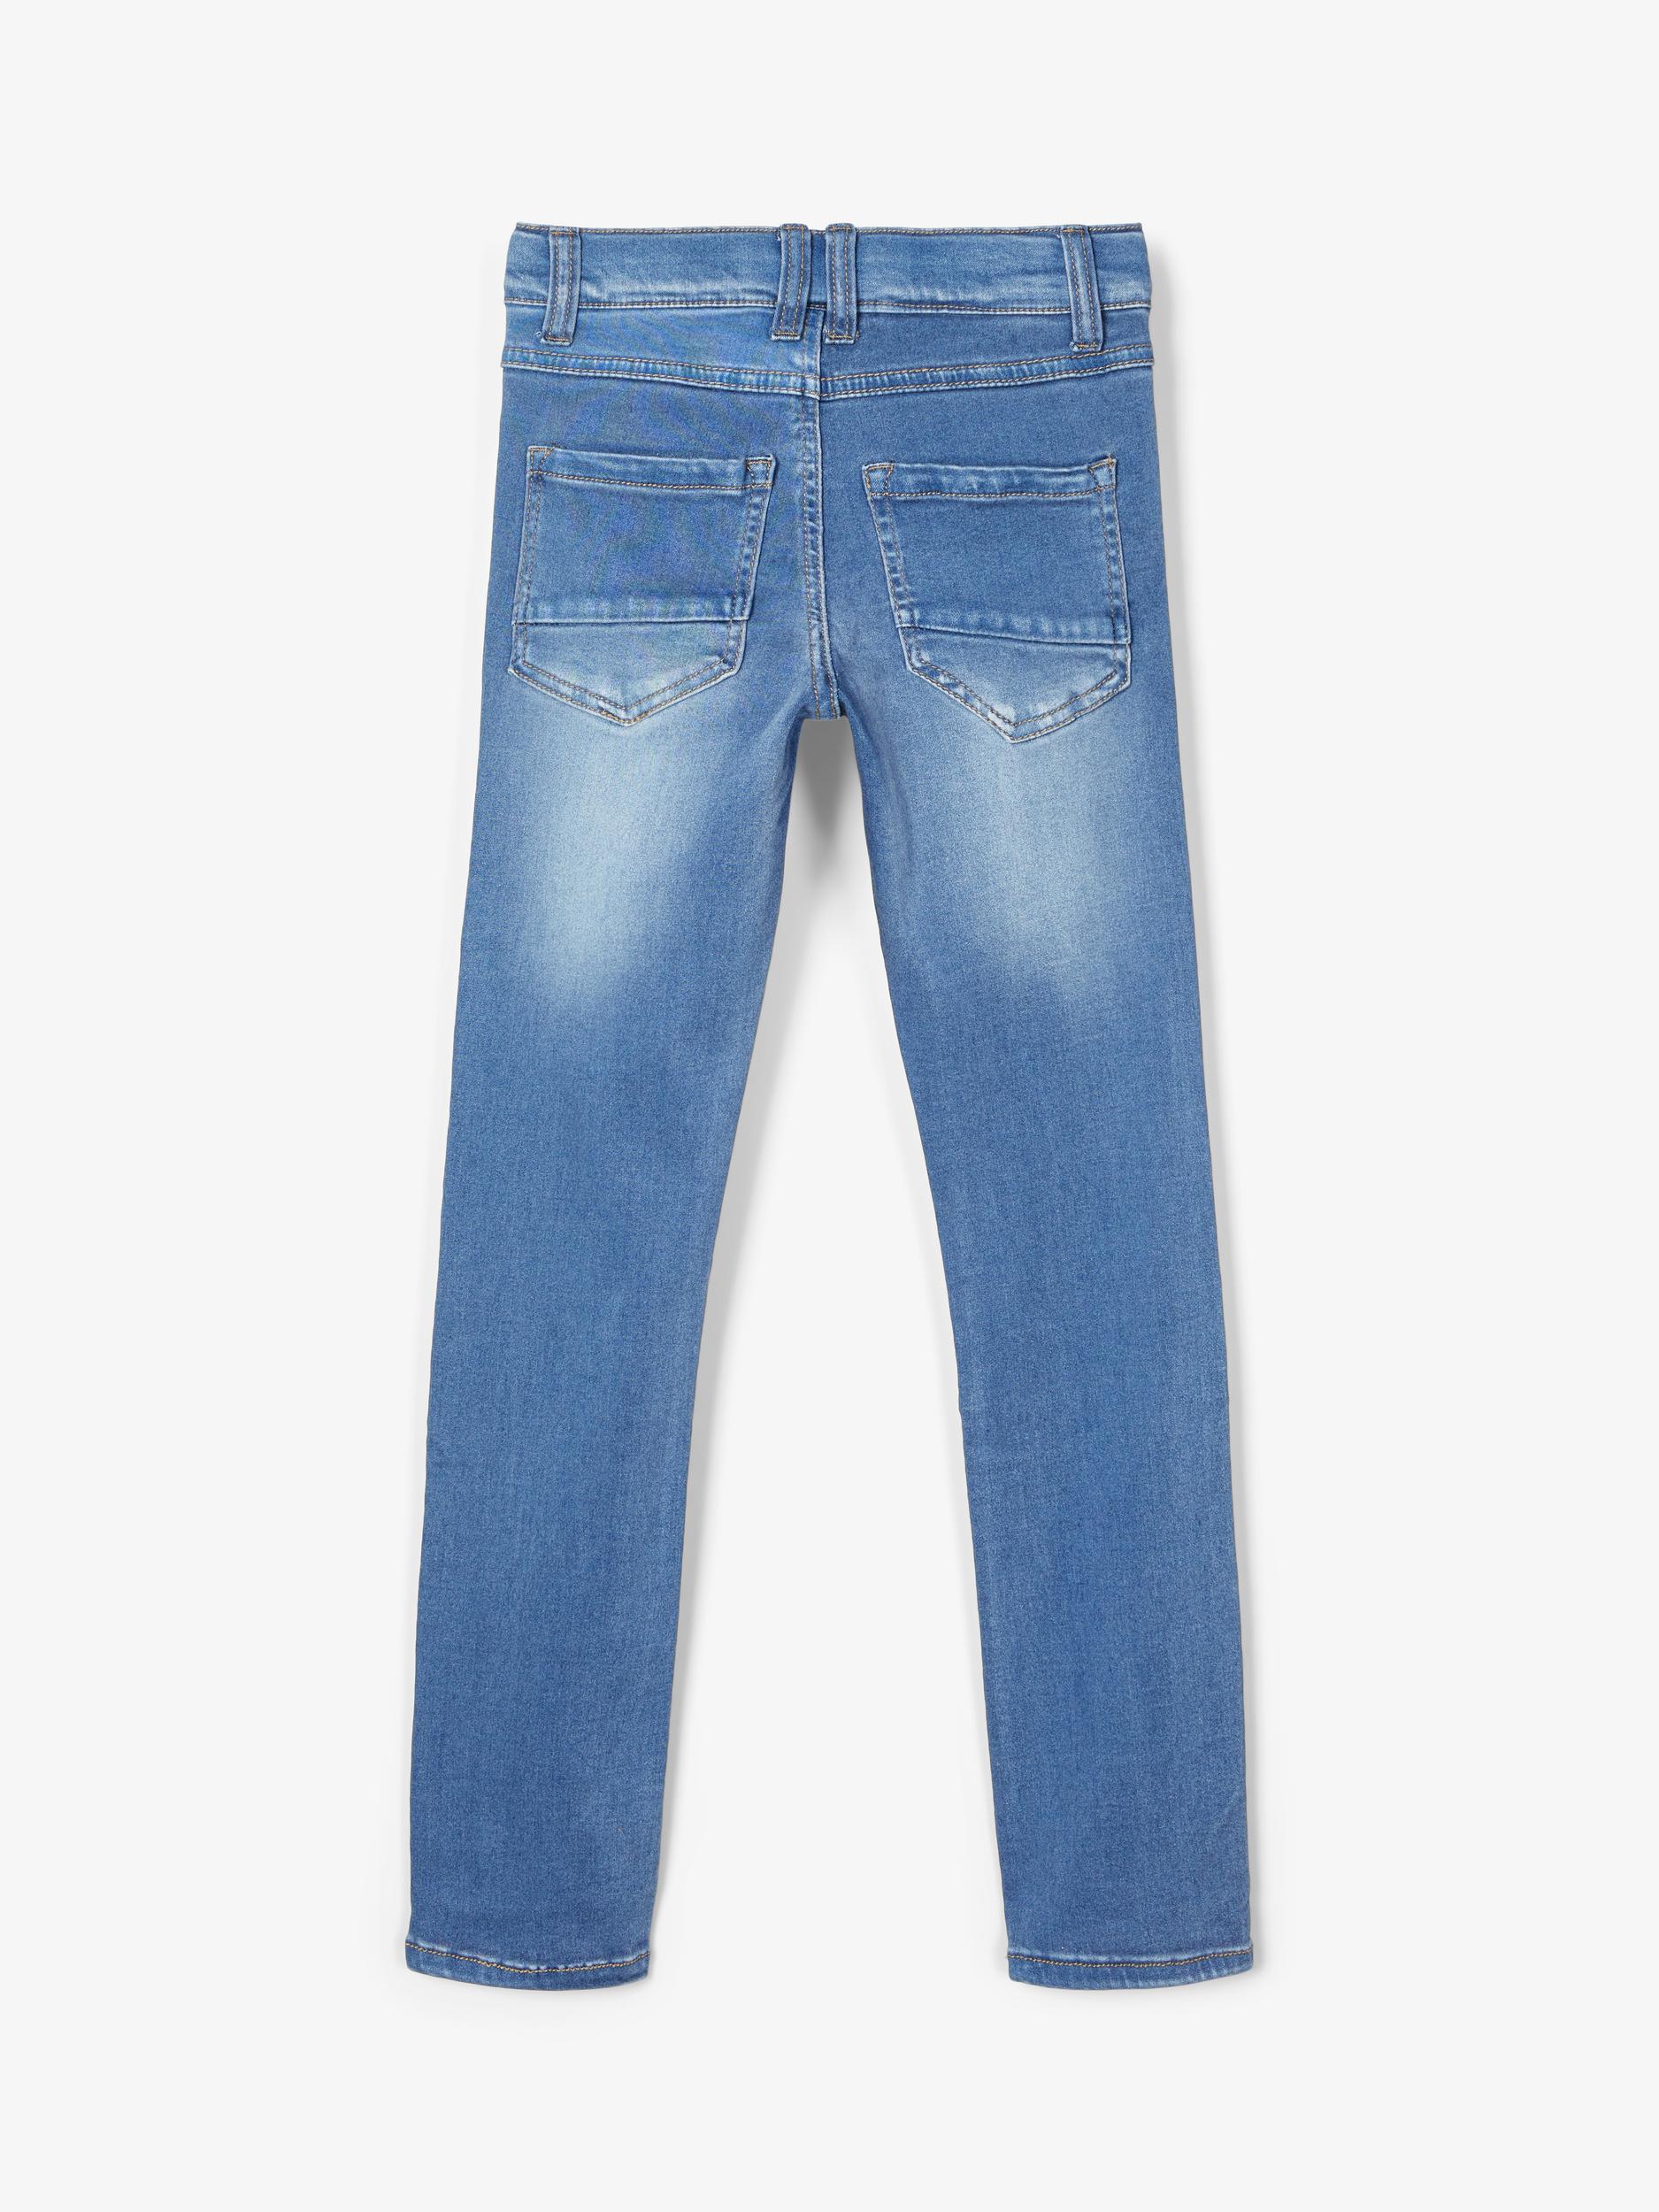 Theo X-Slim Jeans, Medium Blue Denim, 140 cm